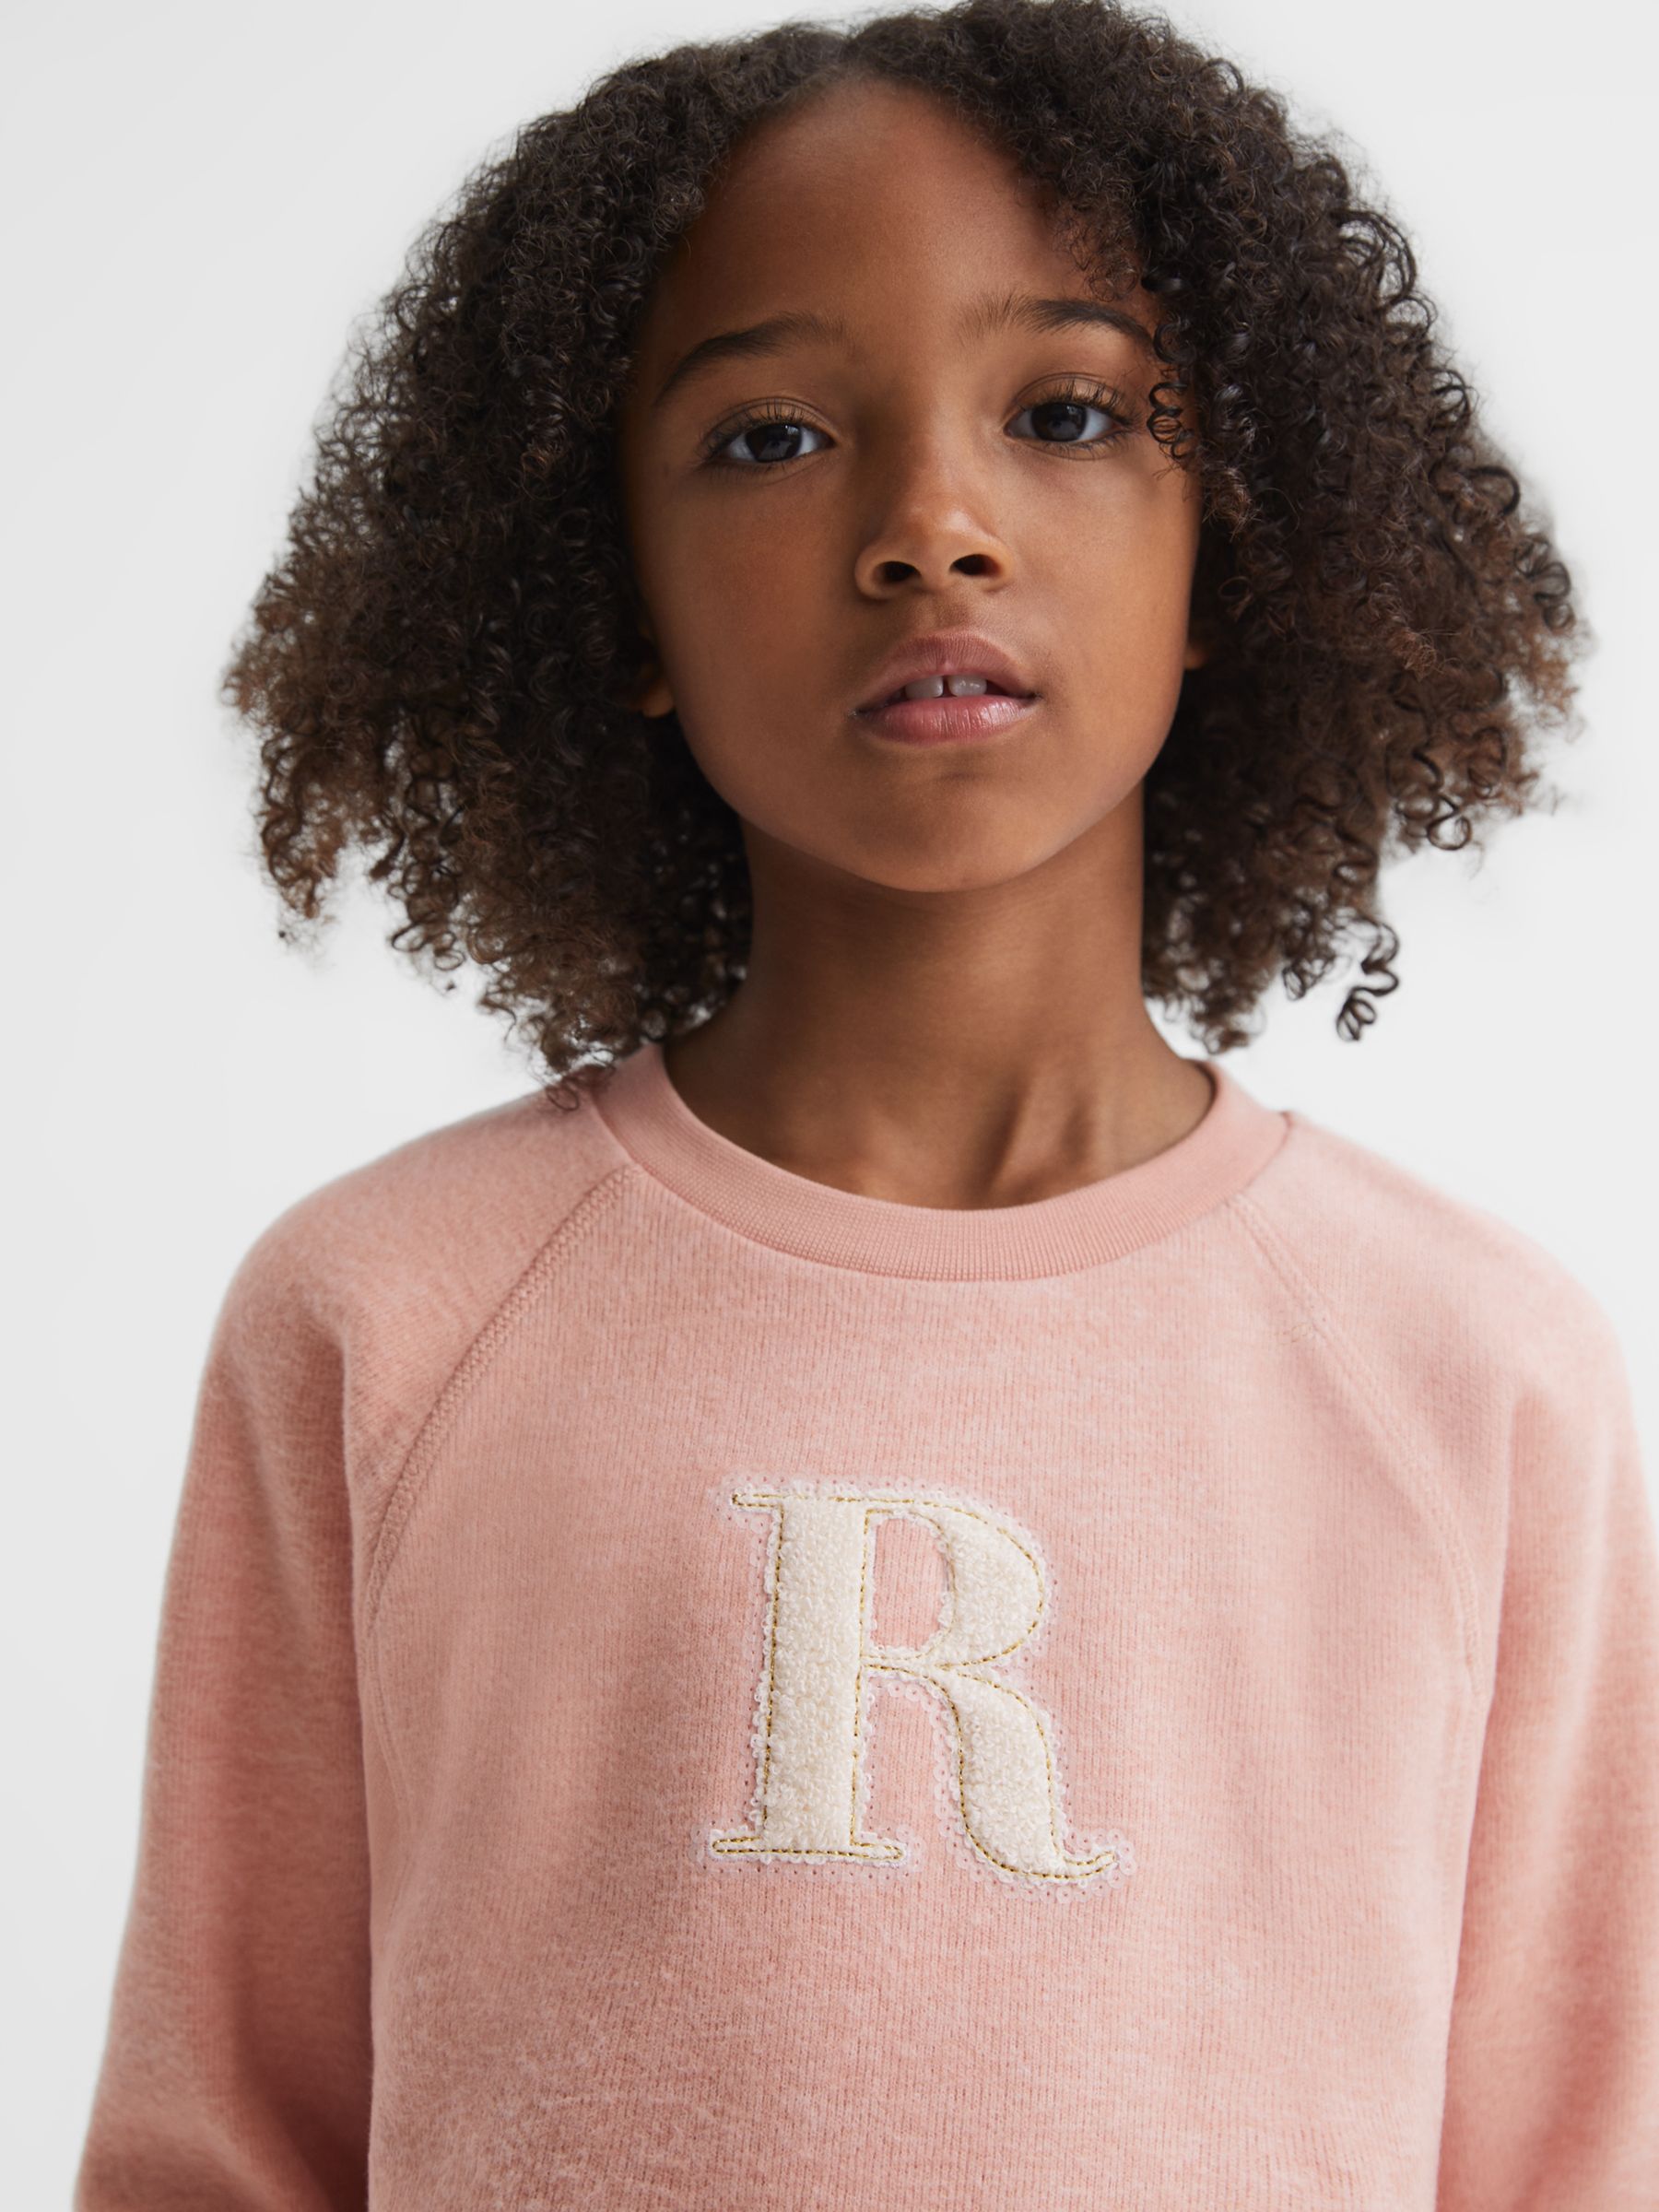 Buy Reiss Kids' Connie Logo Sweatshirt, Apricot Online at johnlewis.com